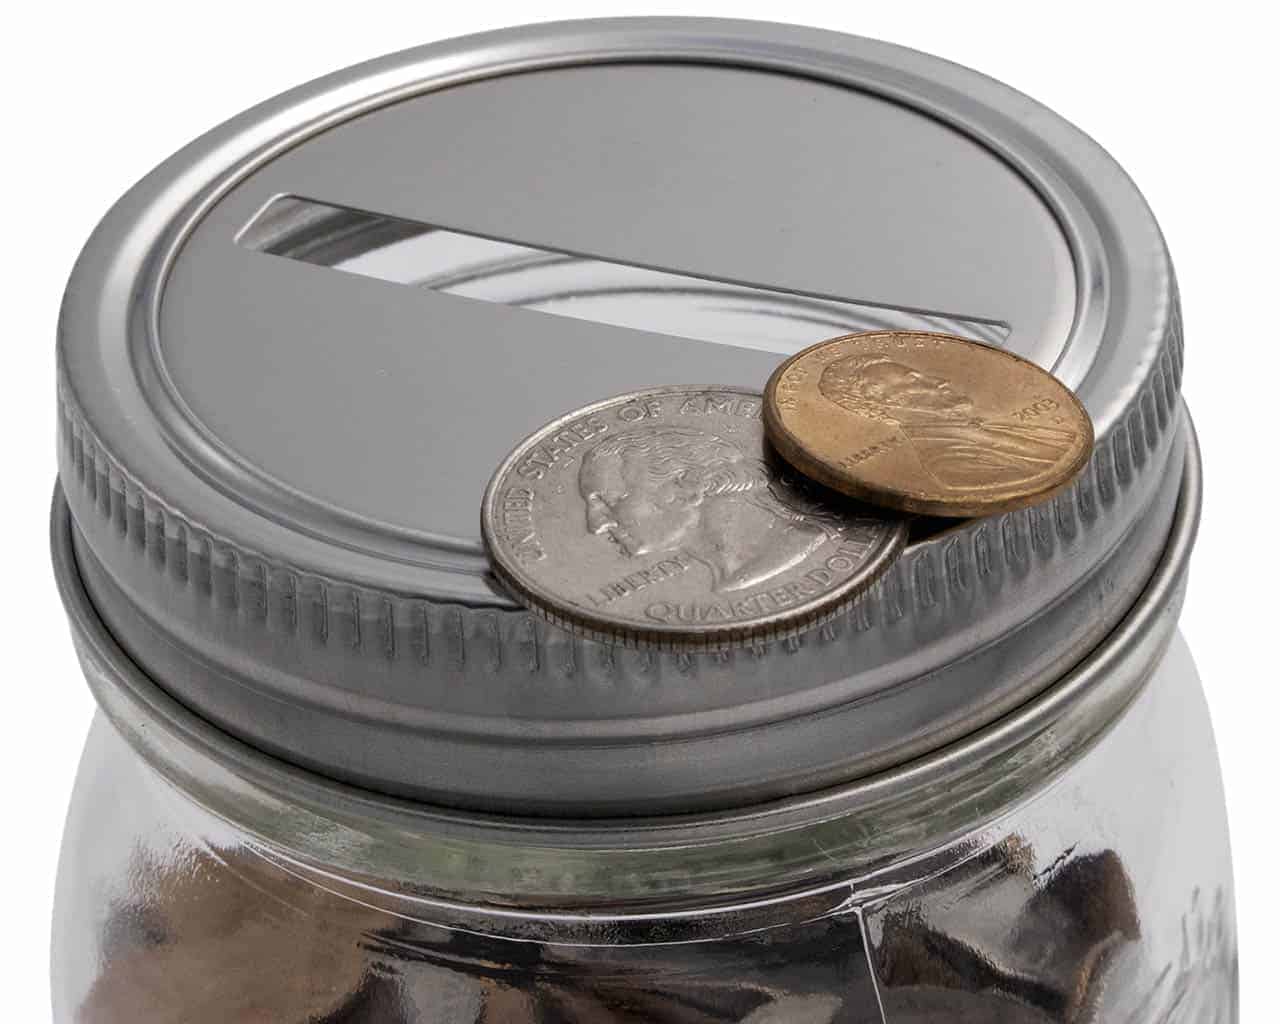 mason-jar-lifestyle-stainless-steel-coin-slot-bank-lid-insert-stainless-steel-band-regular-mouth-ball-mason-jar-coins-closeup